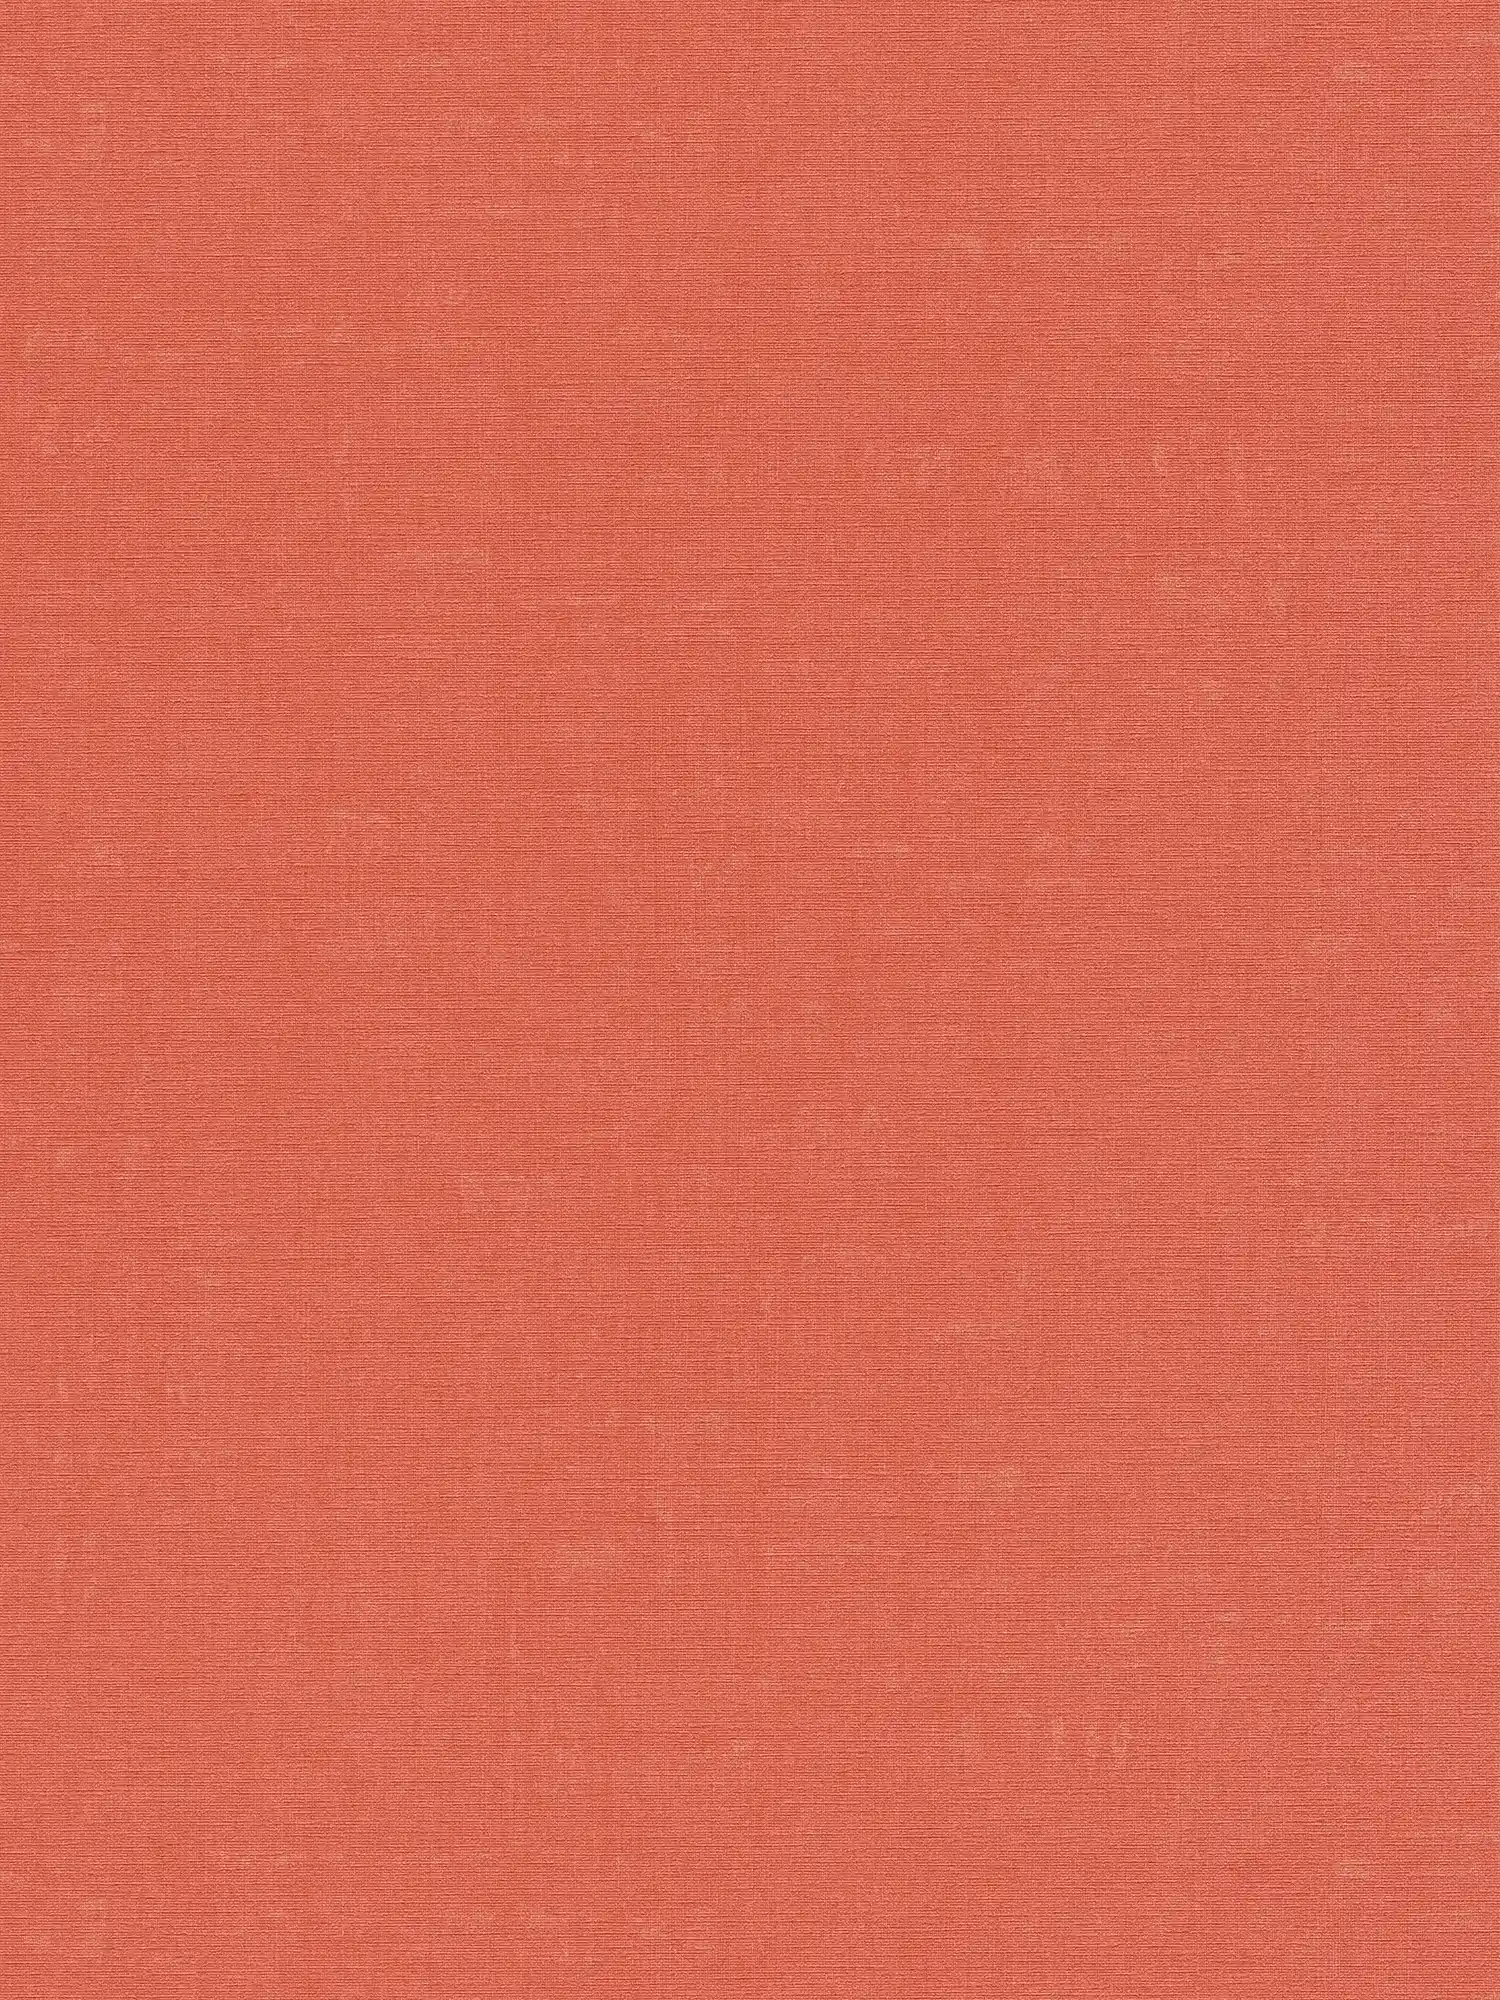 Papel pintado liso con motivos moteados - naranja, rojo
